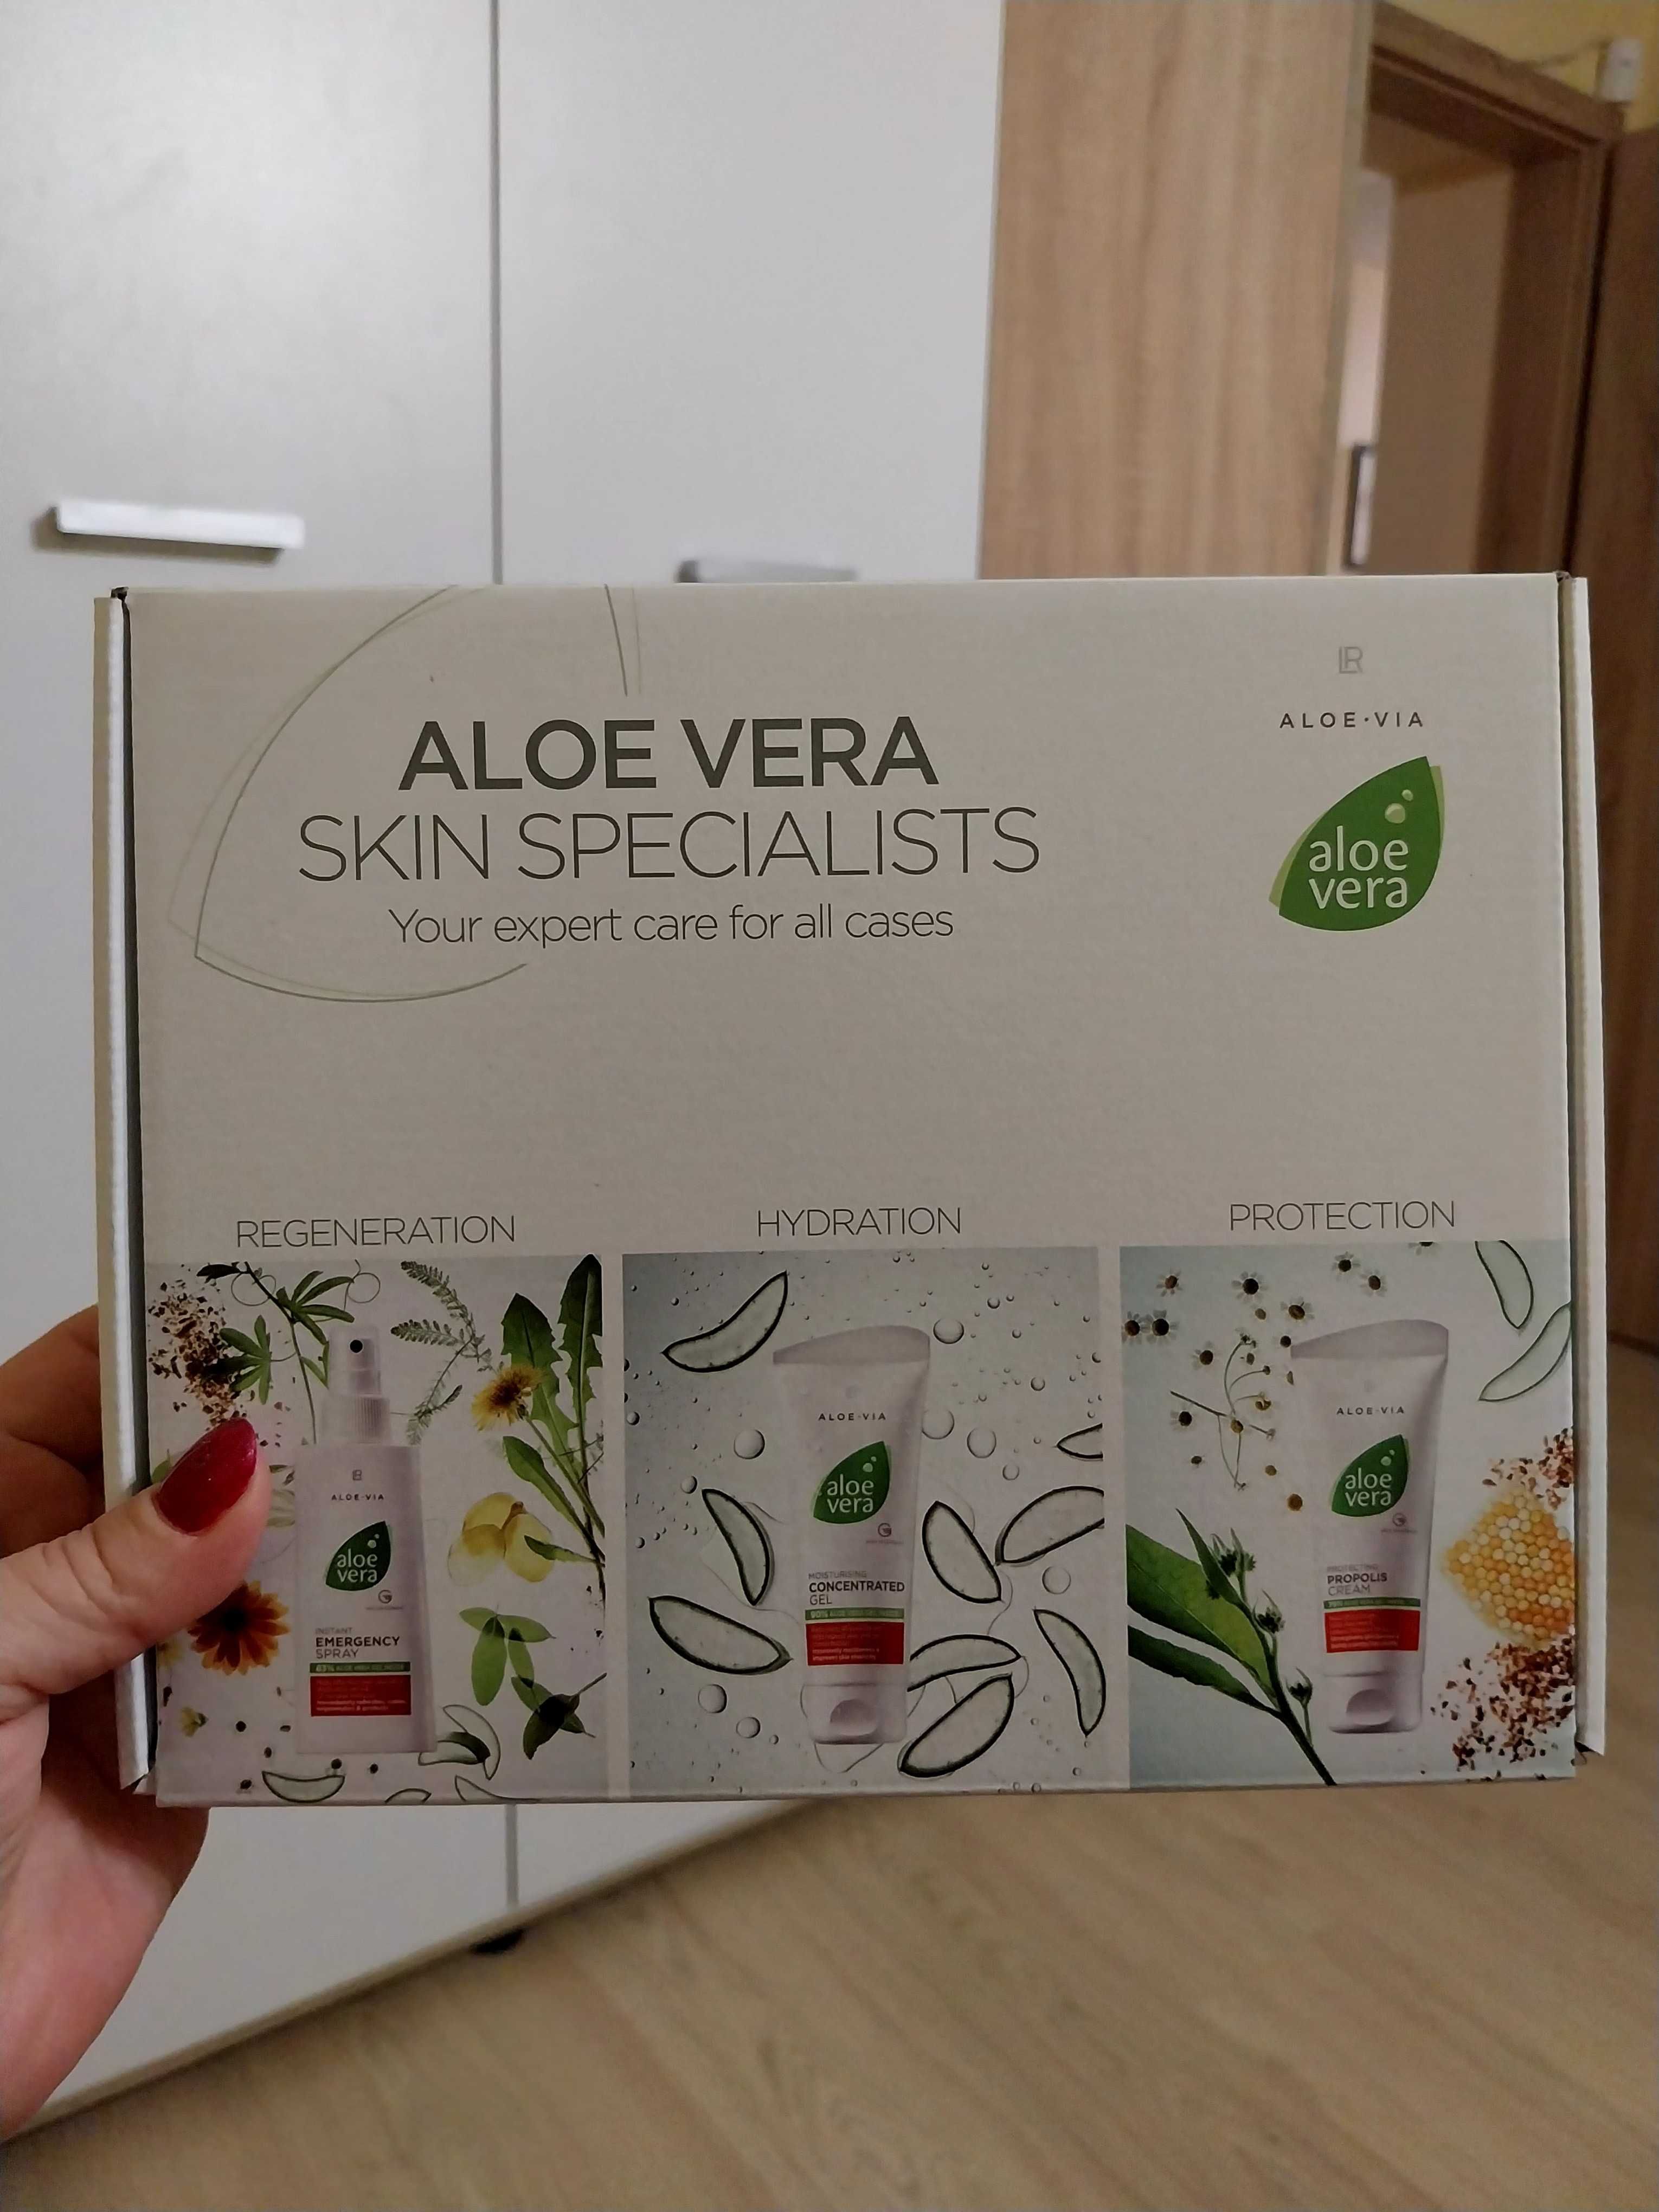 LR Aloe vera box за специална грижа